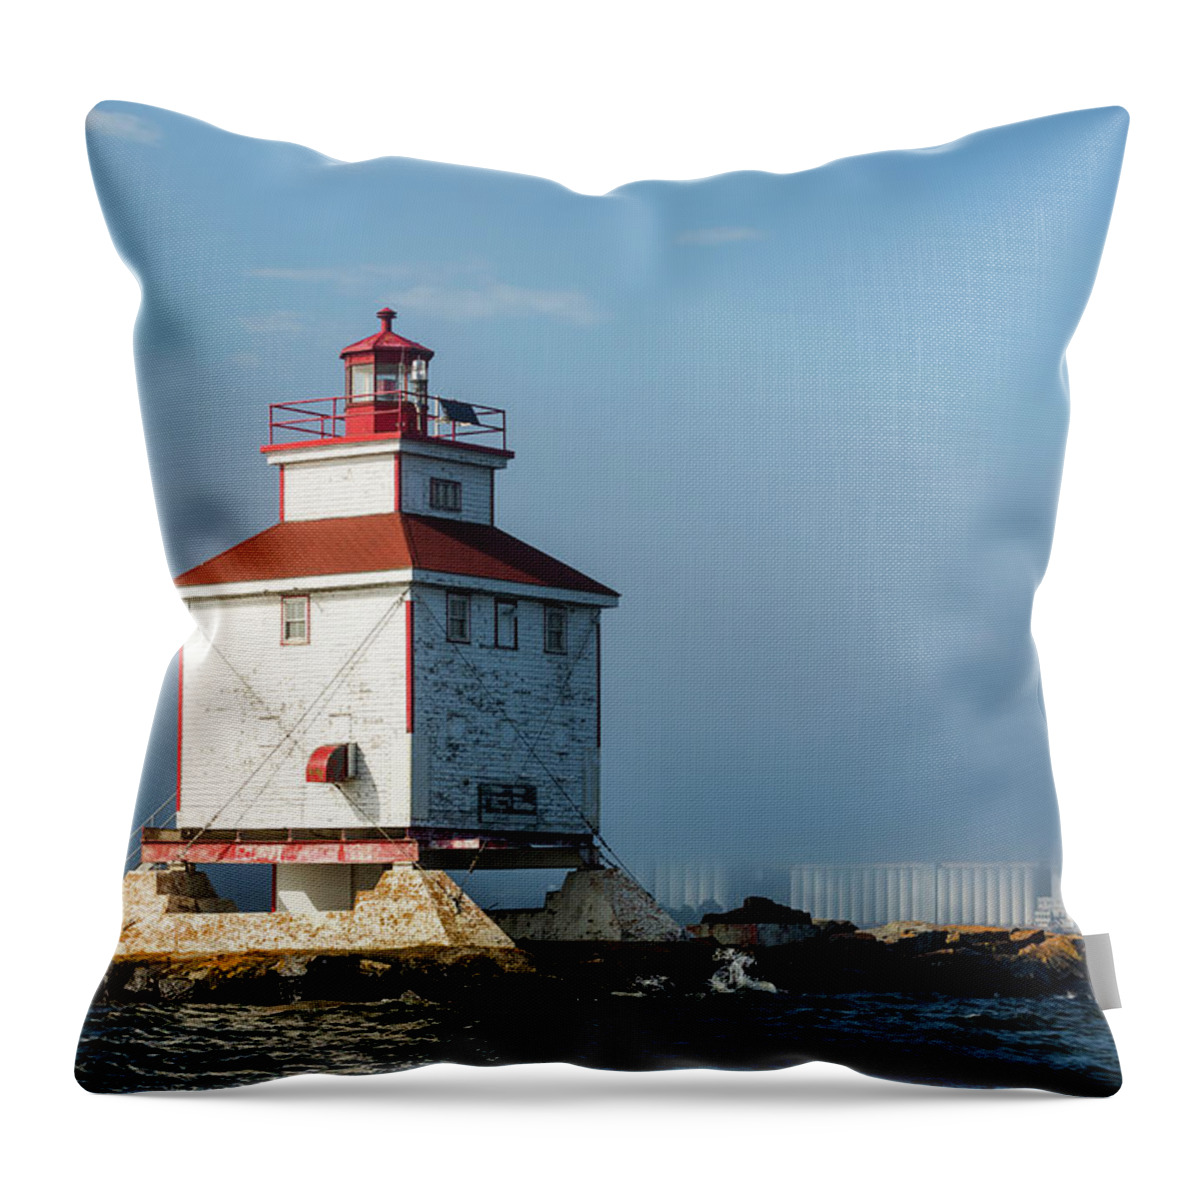 Thunder Bay Main Throw Pillow featuring the photograph Thunder Bay Main by Linda Ryma